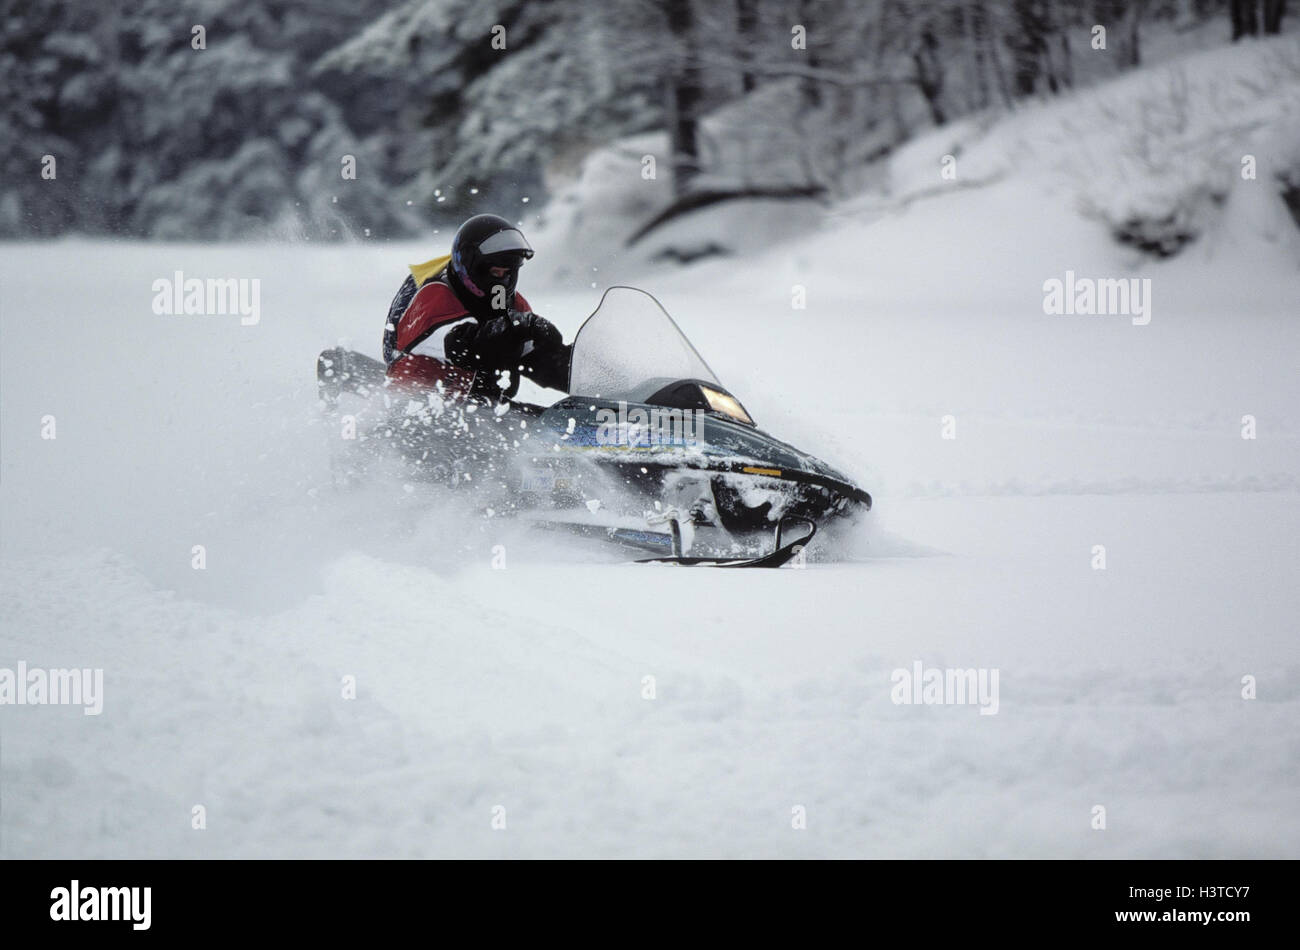 https://c8.alamy.com/compde/h3tcy7/winterlandschaft-mann-schneemobil-winter-schnee-go-fahrzeug-transport-forderung-holz-motor-schieben-skidoo-snow-mobile-motor-schlitten-reiten-fortbewegung-wintersport-freizeit-zeit-sport-freizeit-hobby-h3tcy7.jpg